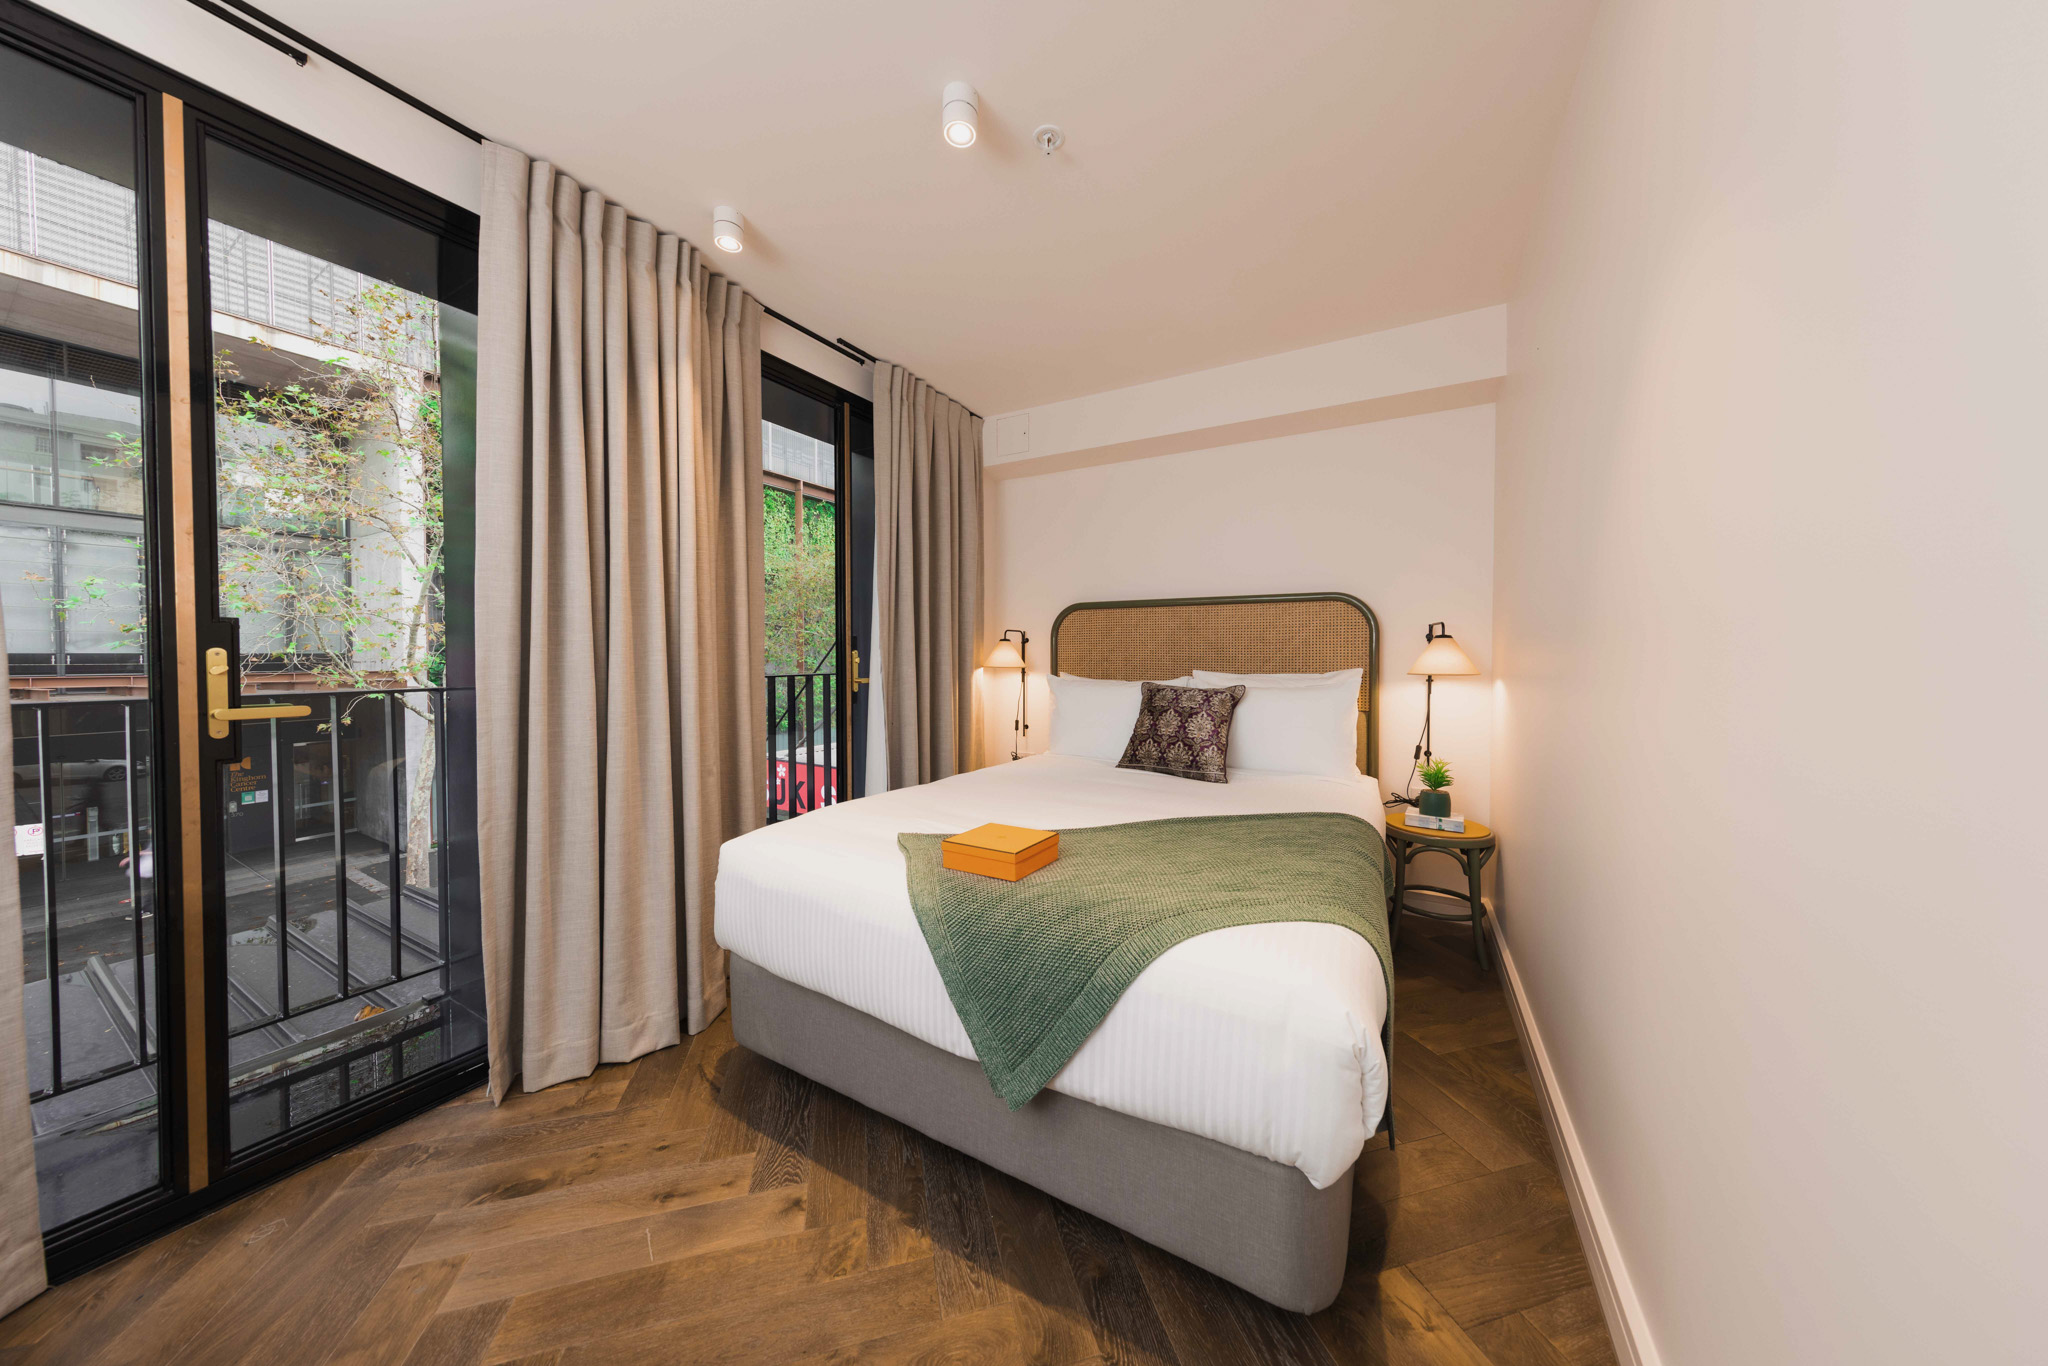 Bedroom Balcony - Hotel Room Double - Urban Rest - The Sarah Hotel - Surry Hills - Sydney